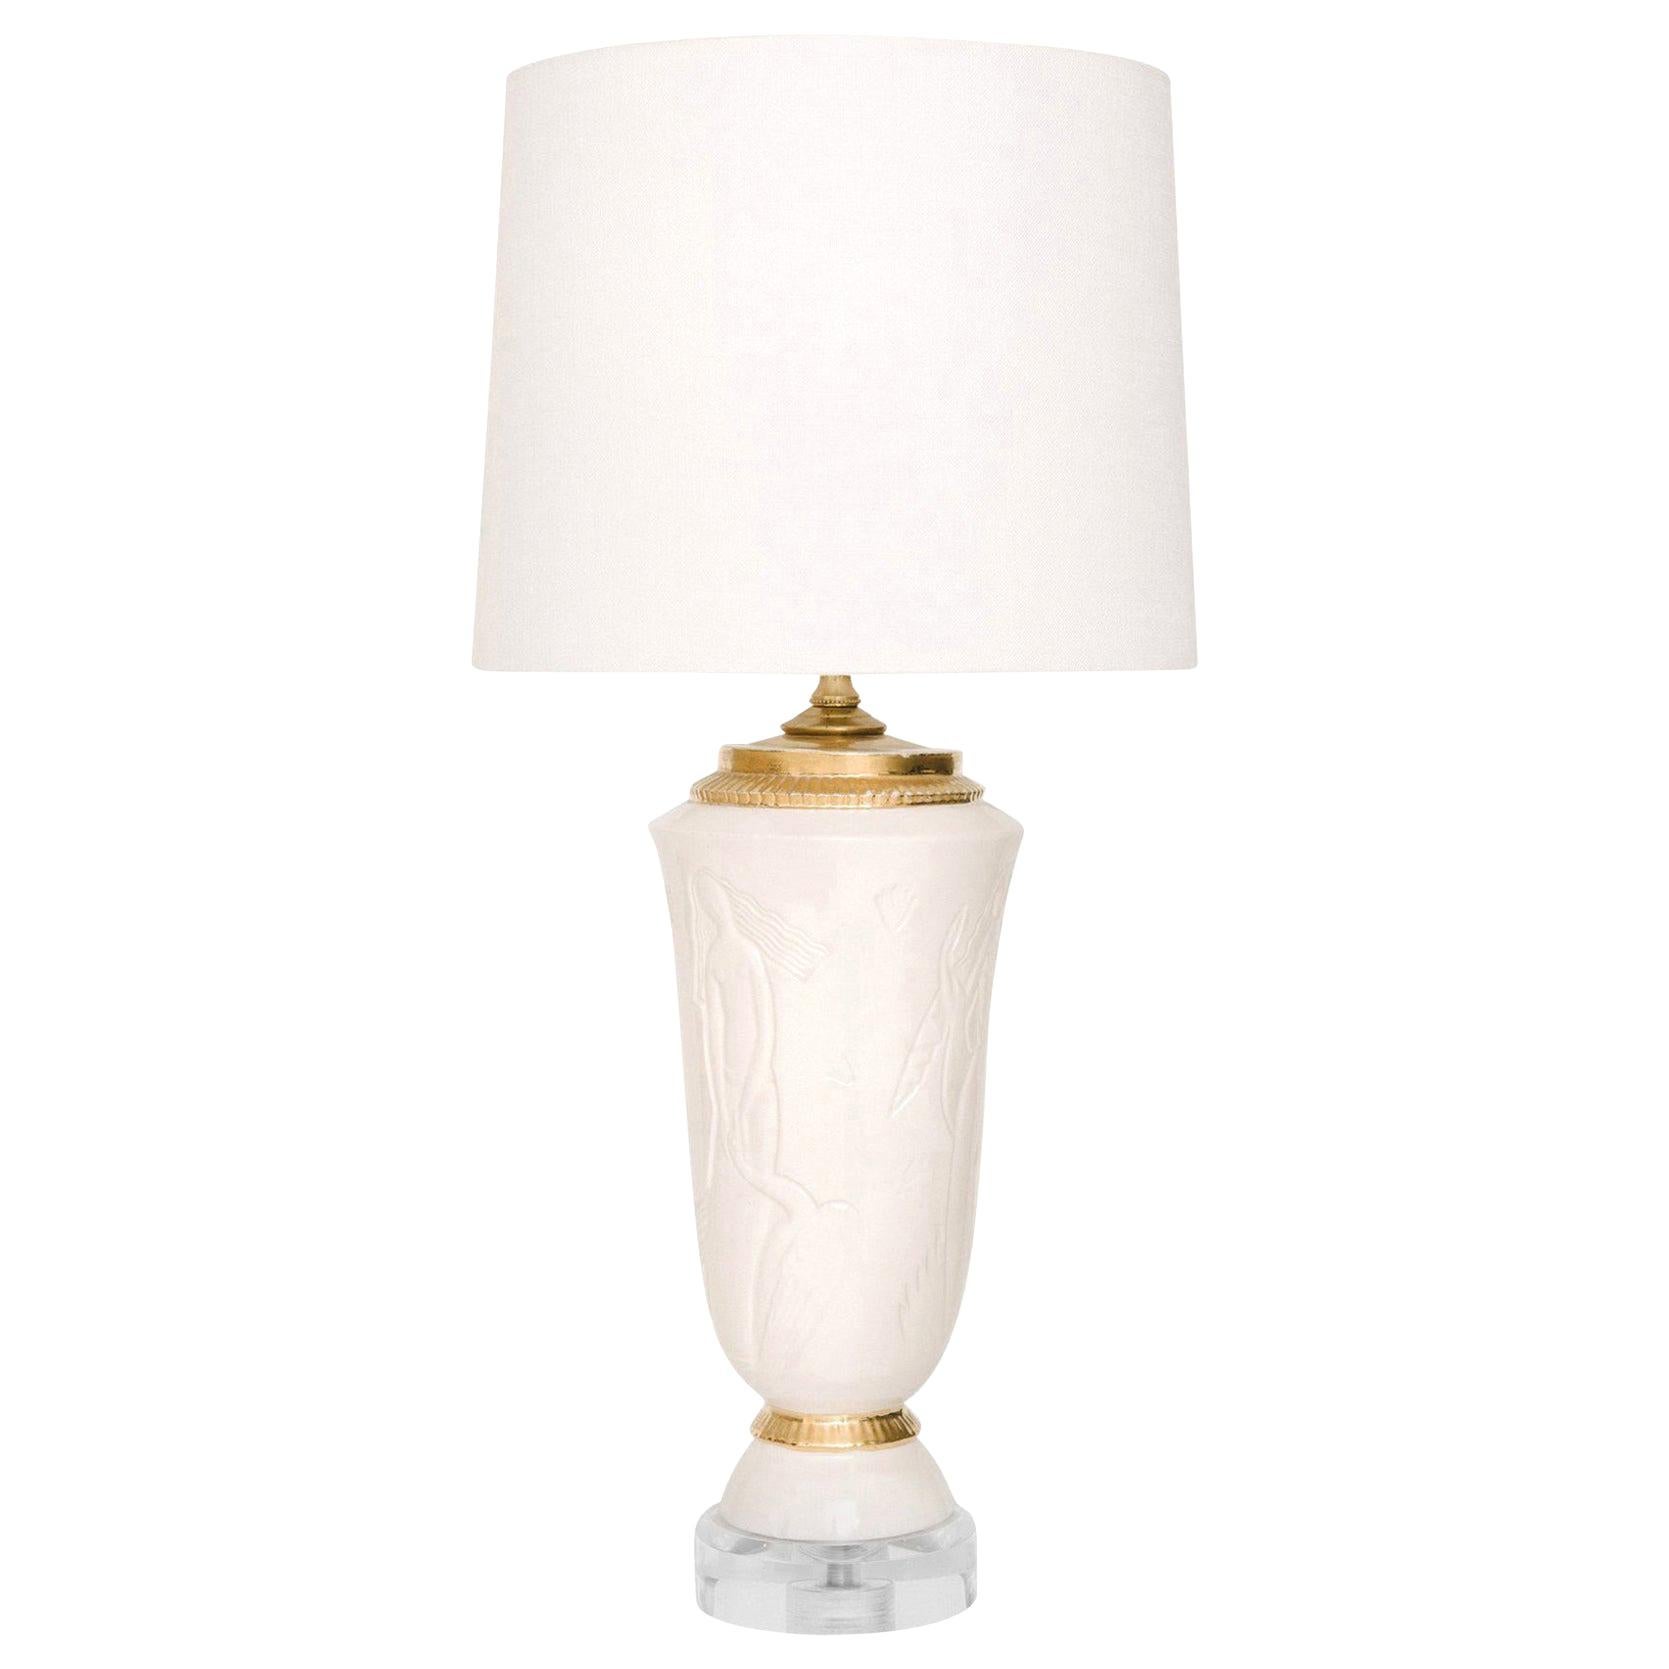 Signed Waylande Gregory White Ceramic Gold Gilt Lamp with White Linen Shade